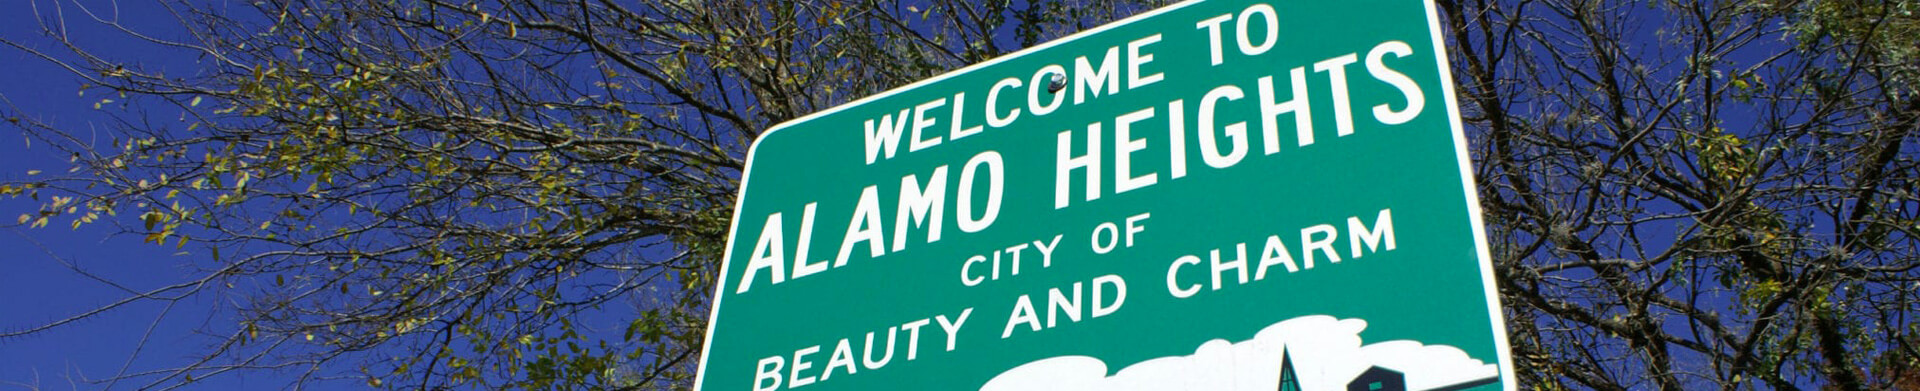 Welcome To Alamo Heights